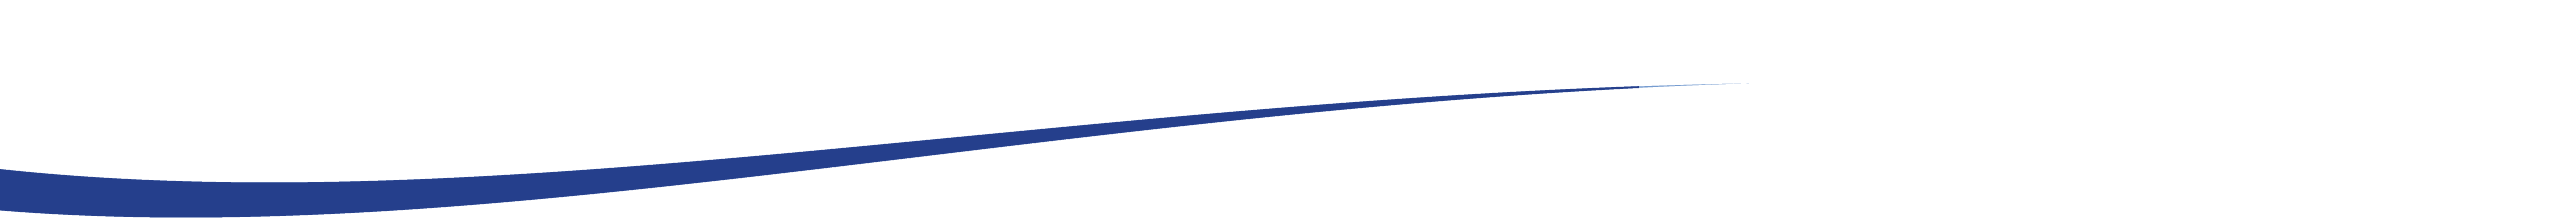 banner curve